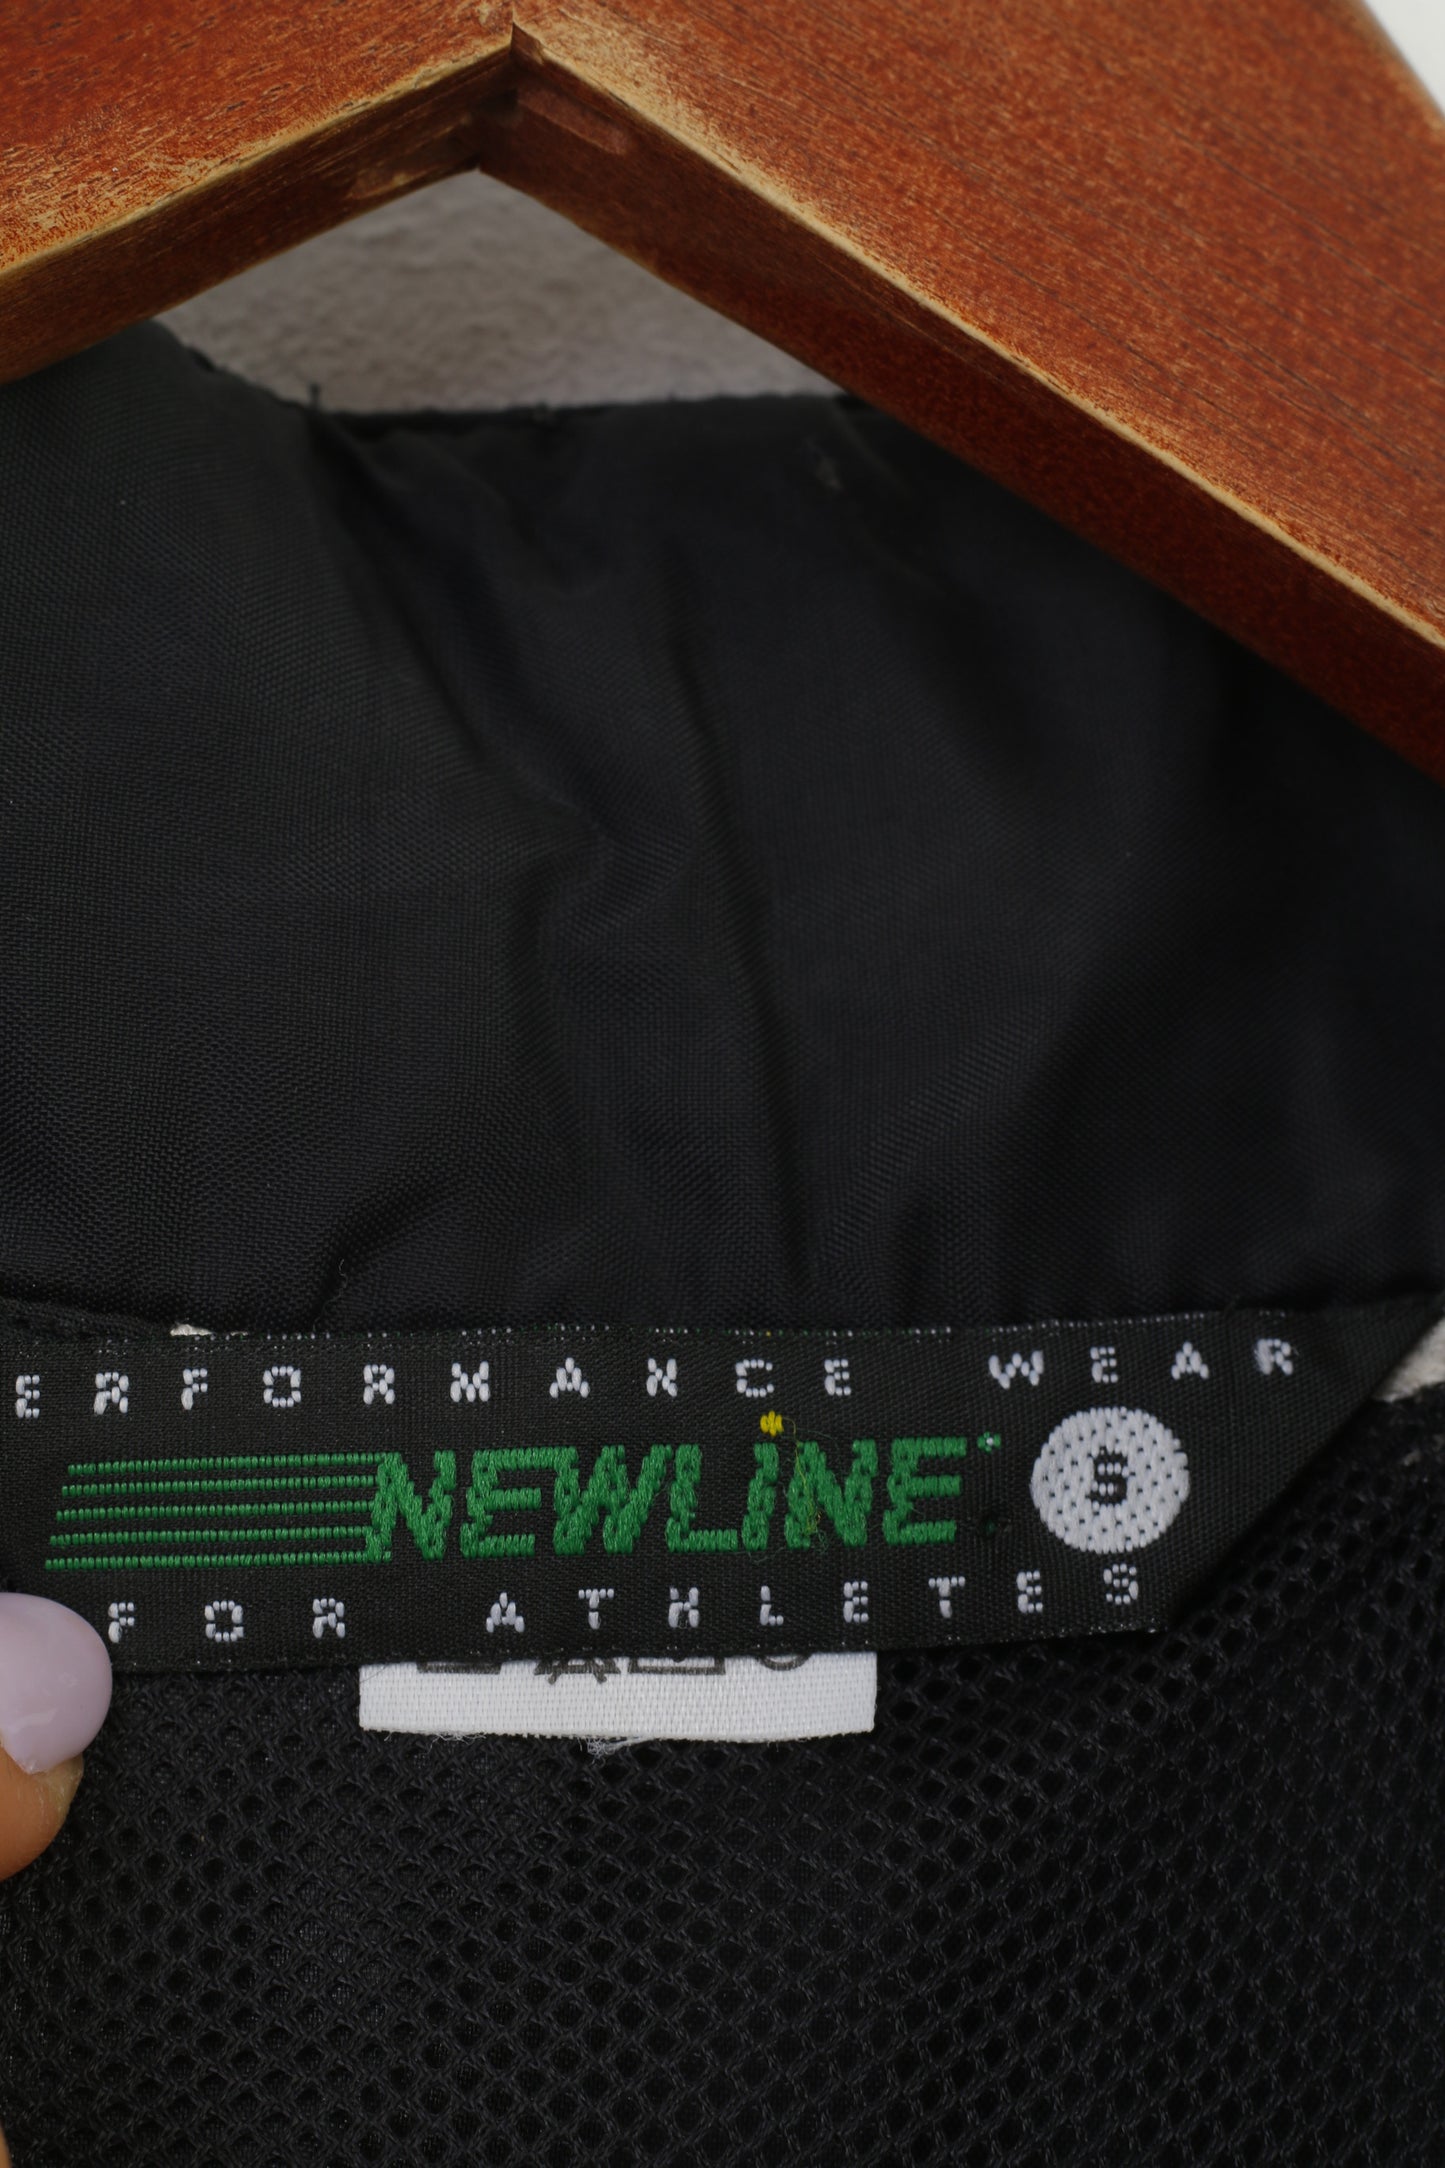 Newline Men S Jacket Black Run Performance Wear Nylon Sport Zip Neck Top